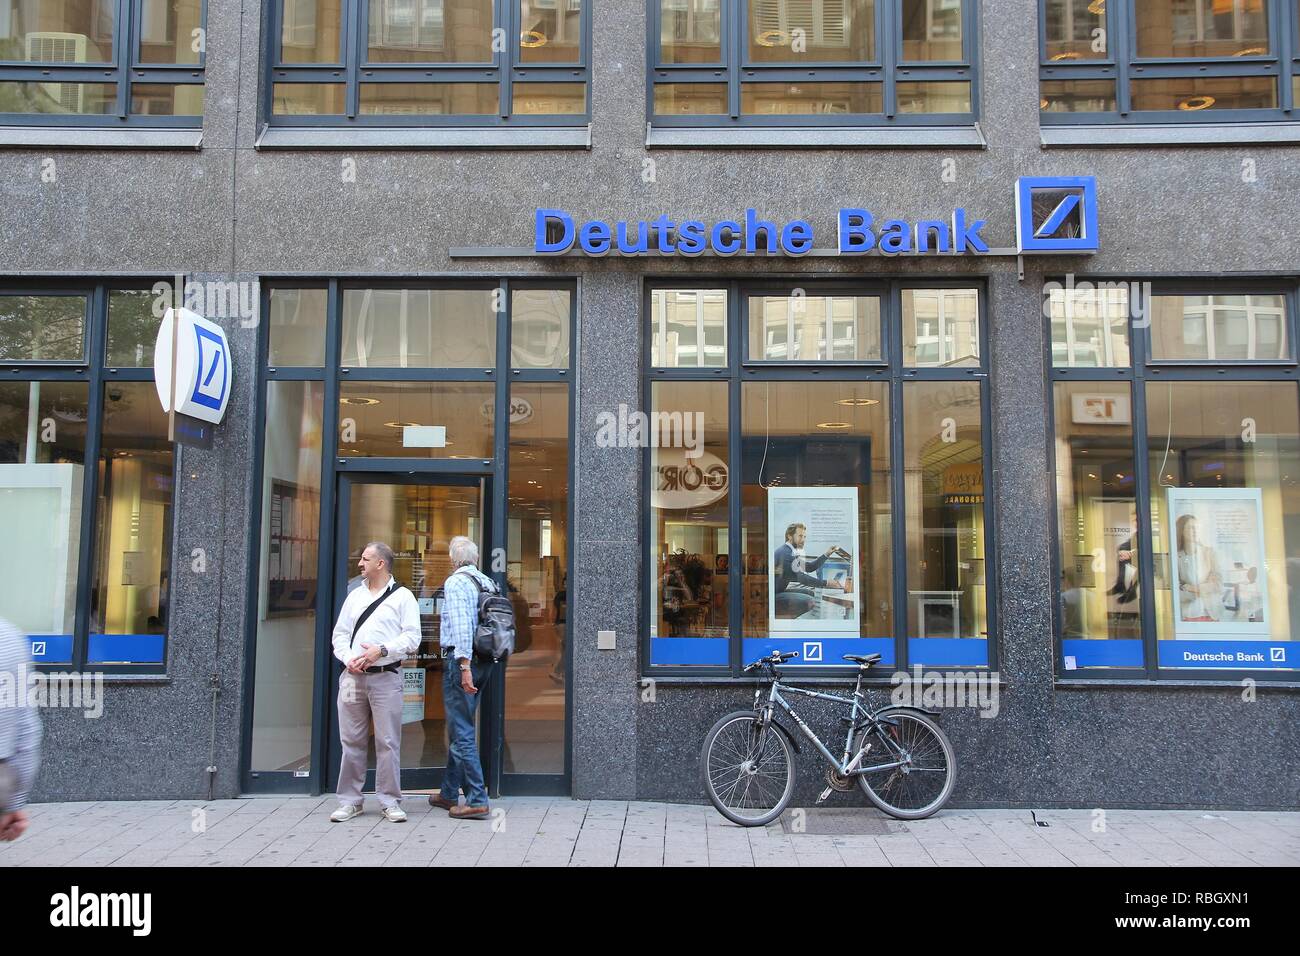 HAMBURG, GERMANY - AUGUST 28, 2014: People visit Deutsche Bank branch in Hamburg. Deutsche Bank is one of largest banks in the world with 98,200 emplo Stock Photo